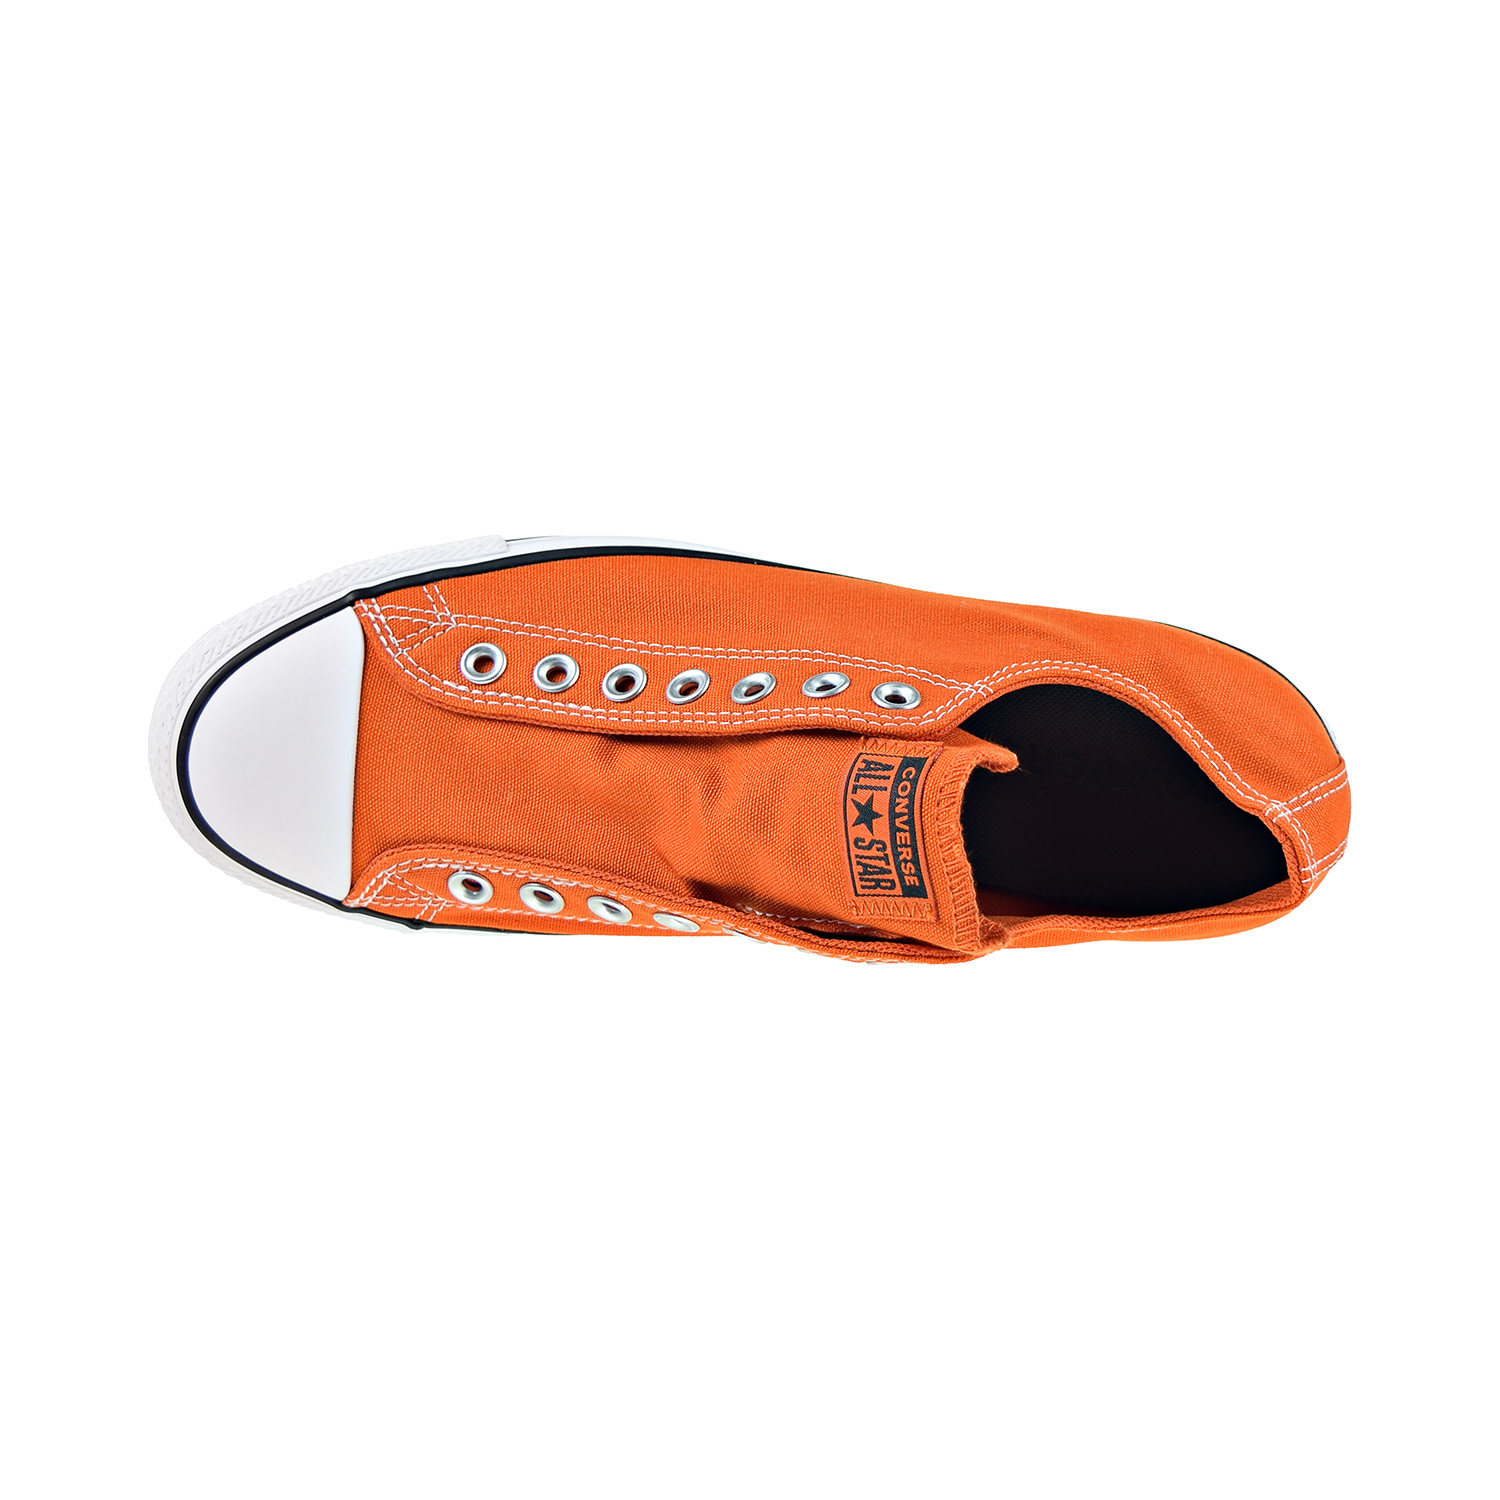 Converse Chuck Taylor All Star Slip On Men's Shoes Campfire Orange-White-Black  166342c